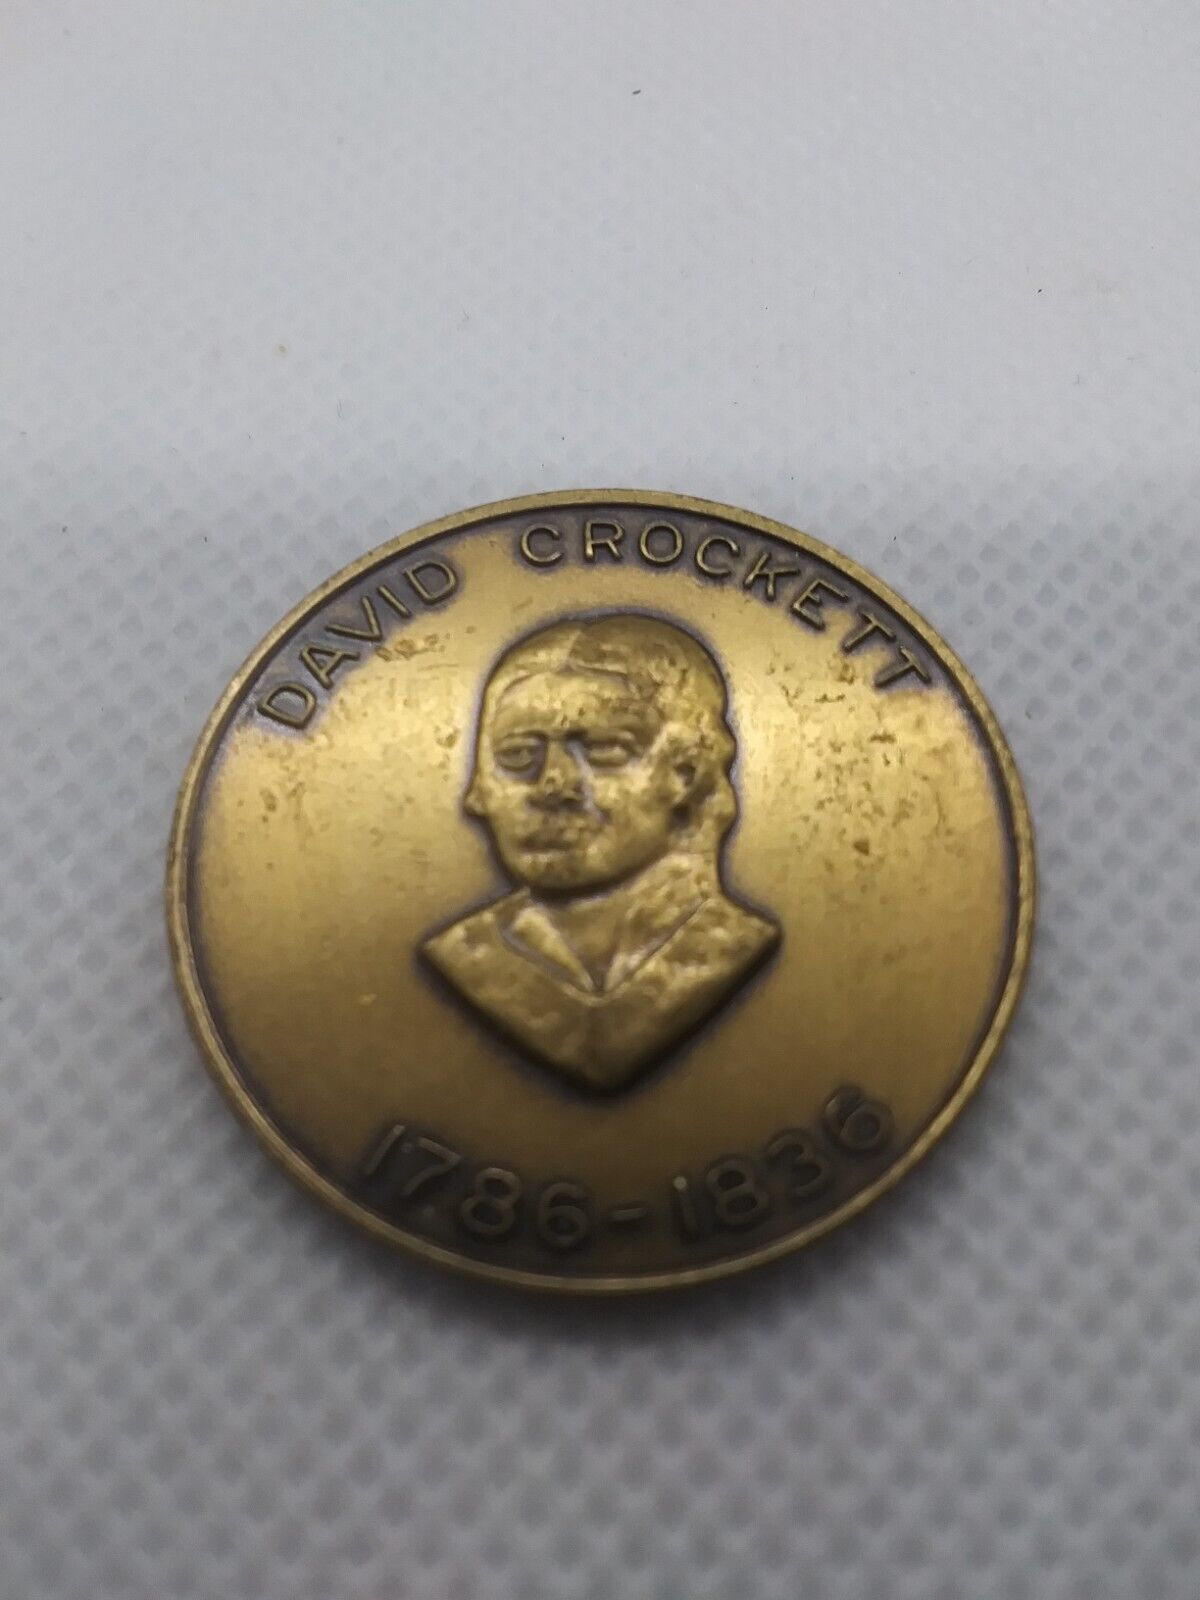 Vintage The Alamo David Crockett San Antonio Texas Medal